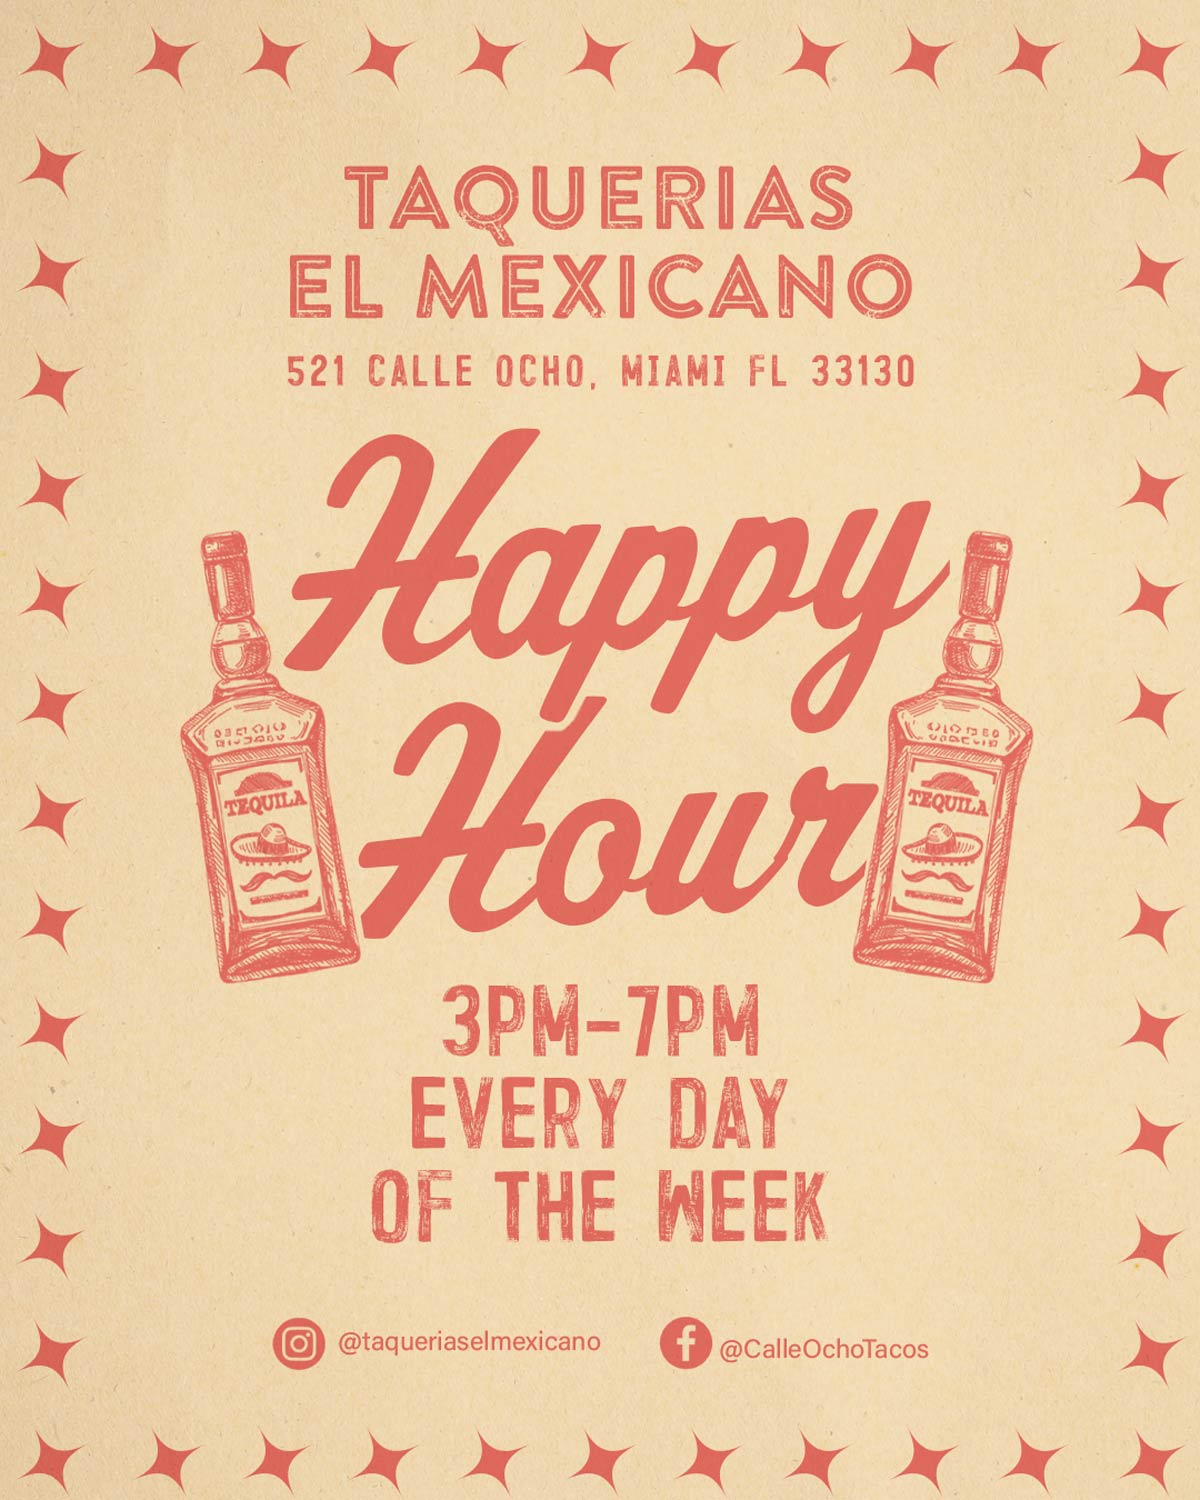 Happy Hour 3 - 7pm every day at Taquerias el Mexicano in Miami Florida